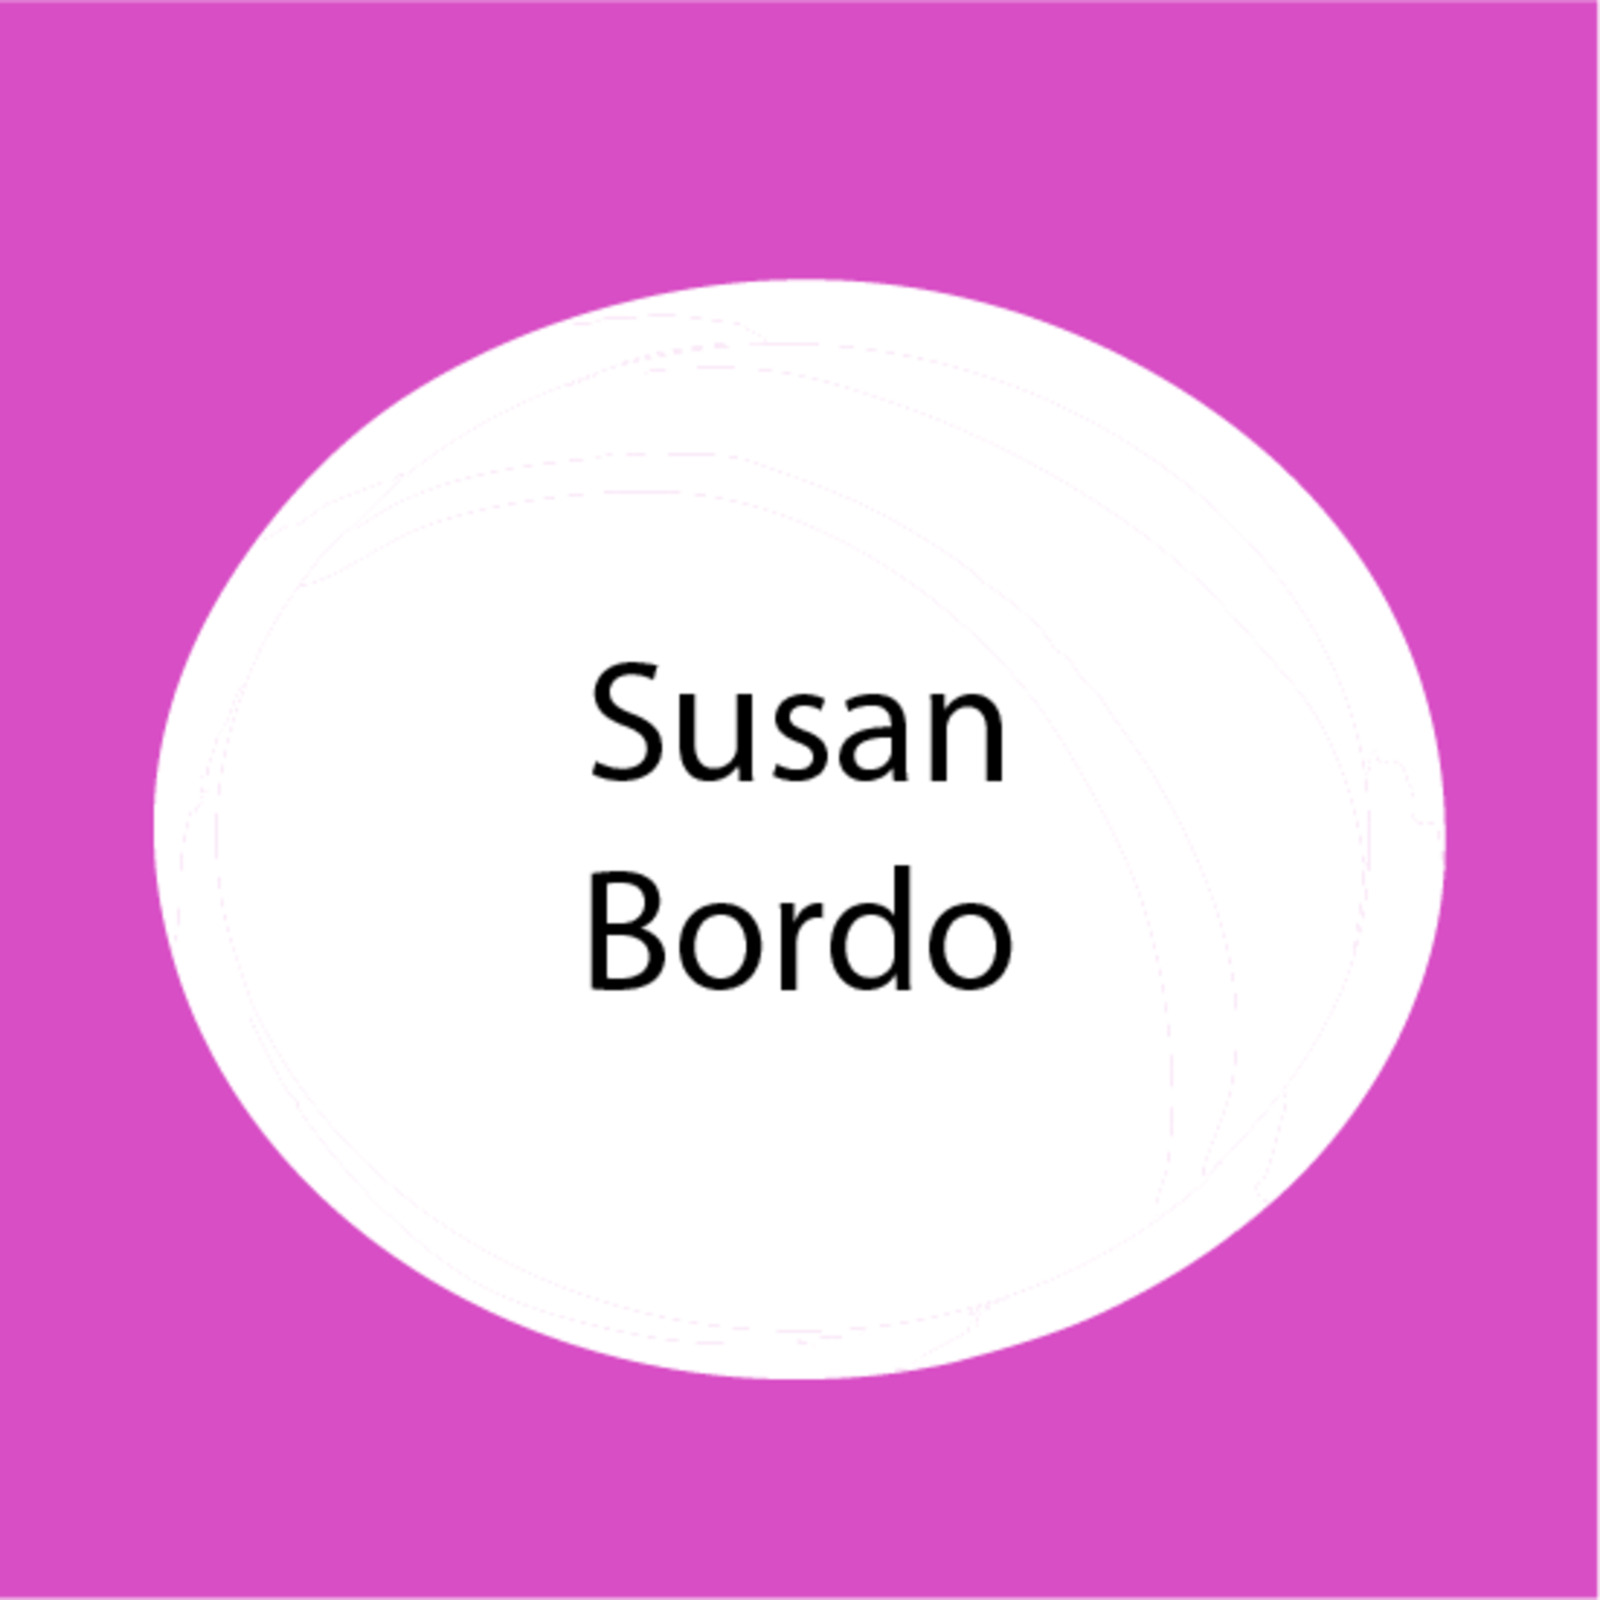 Susan Bordo